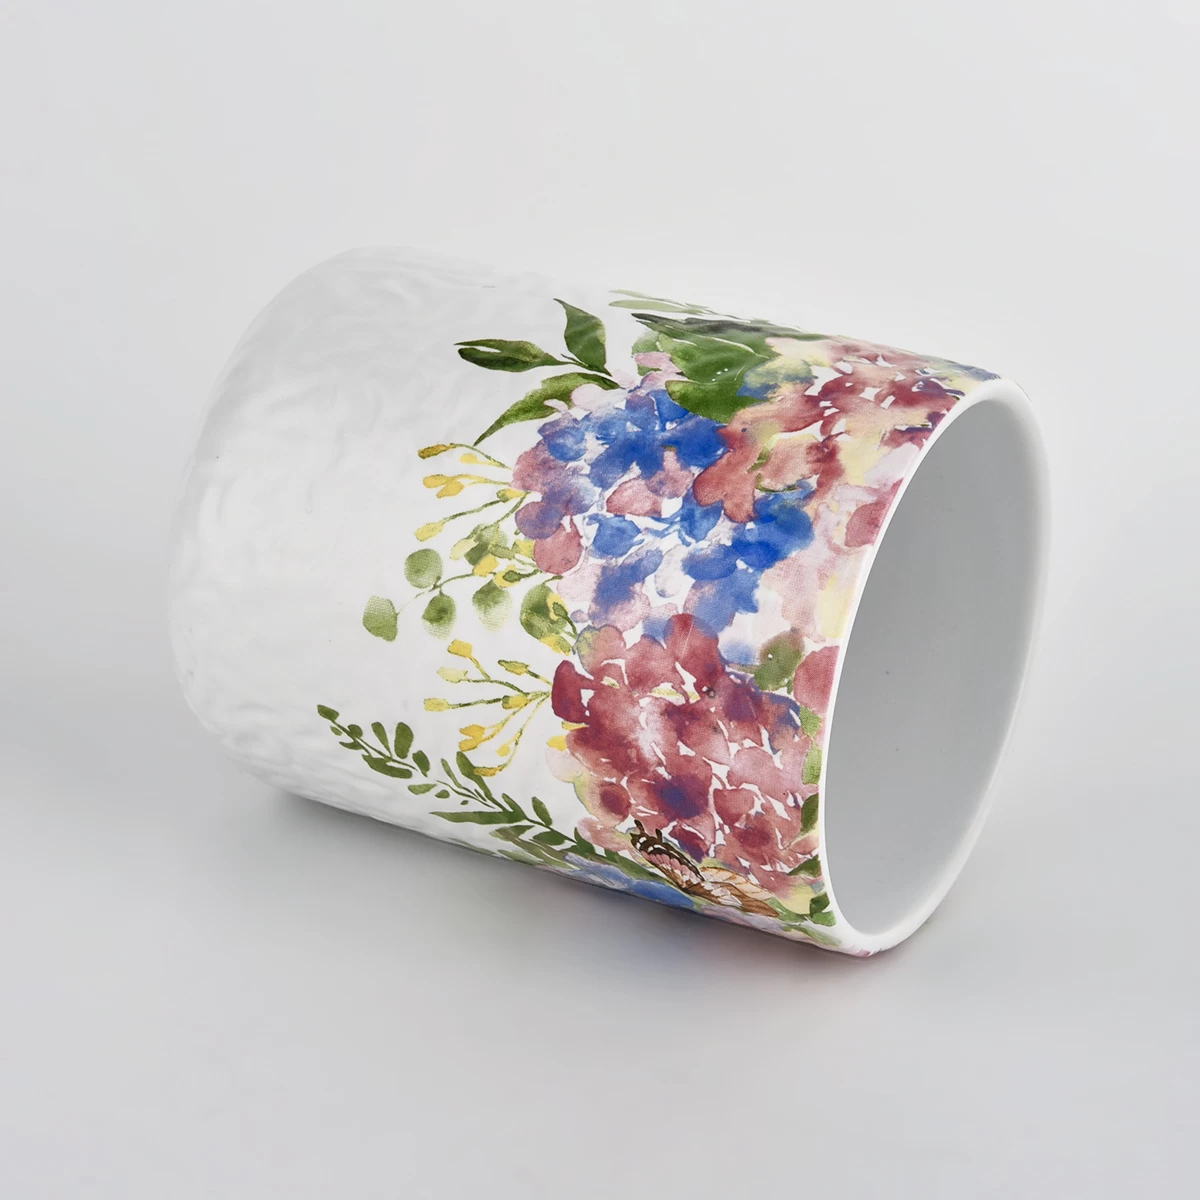 white ceramic vessel with colorful print